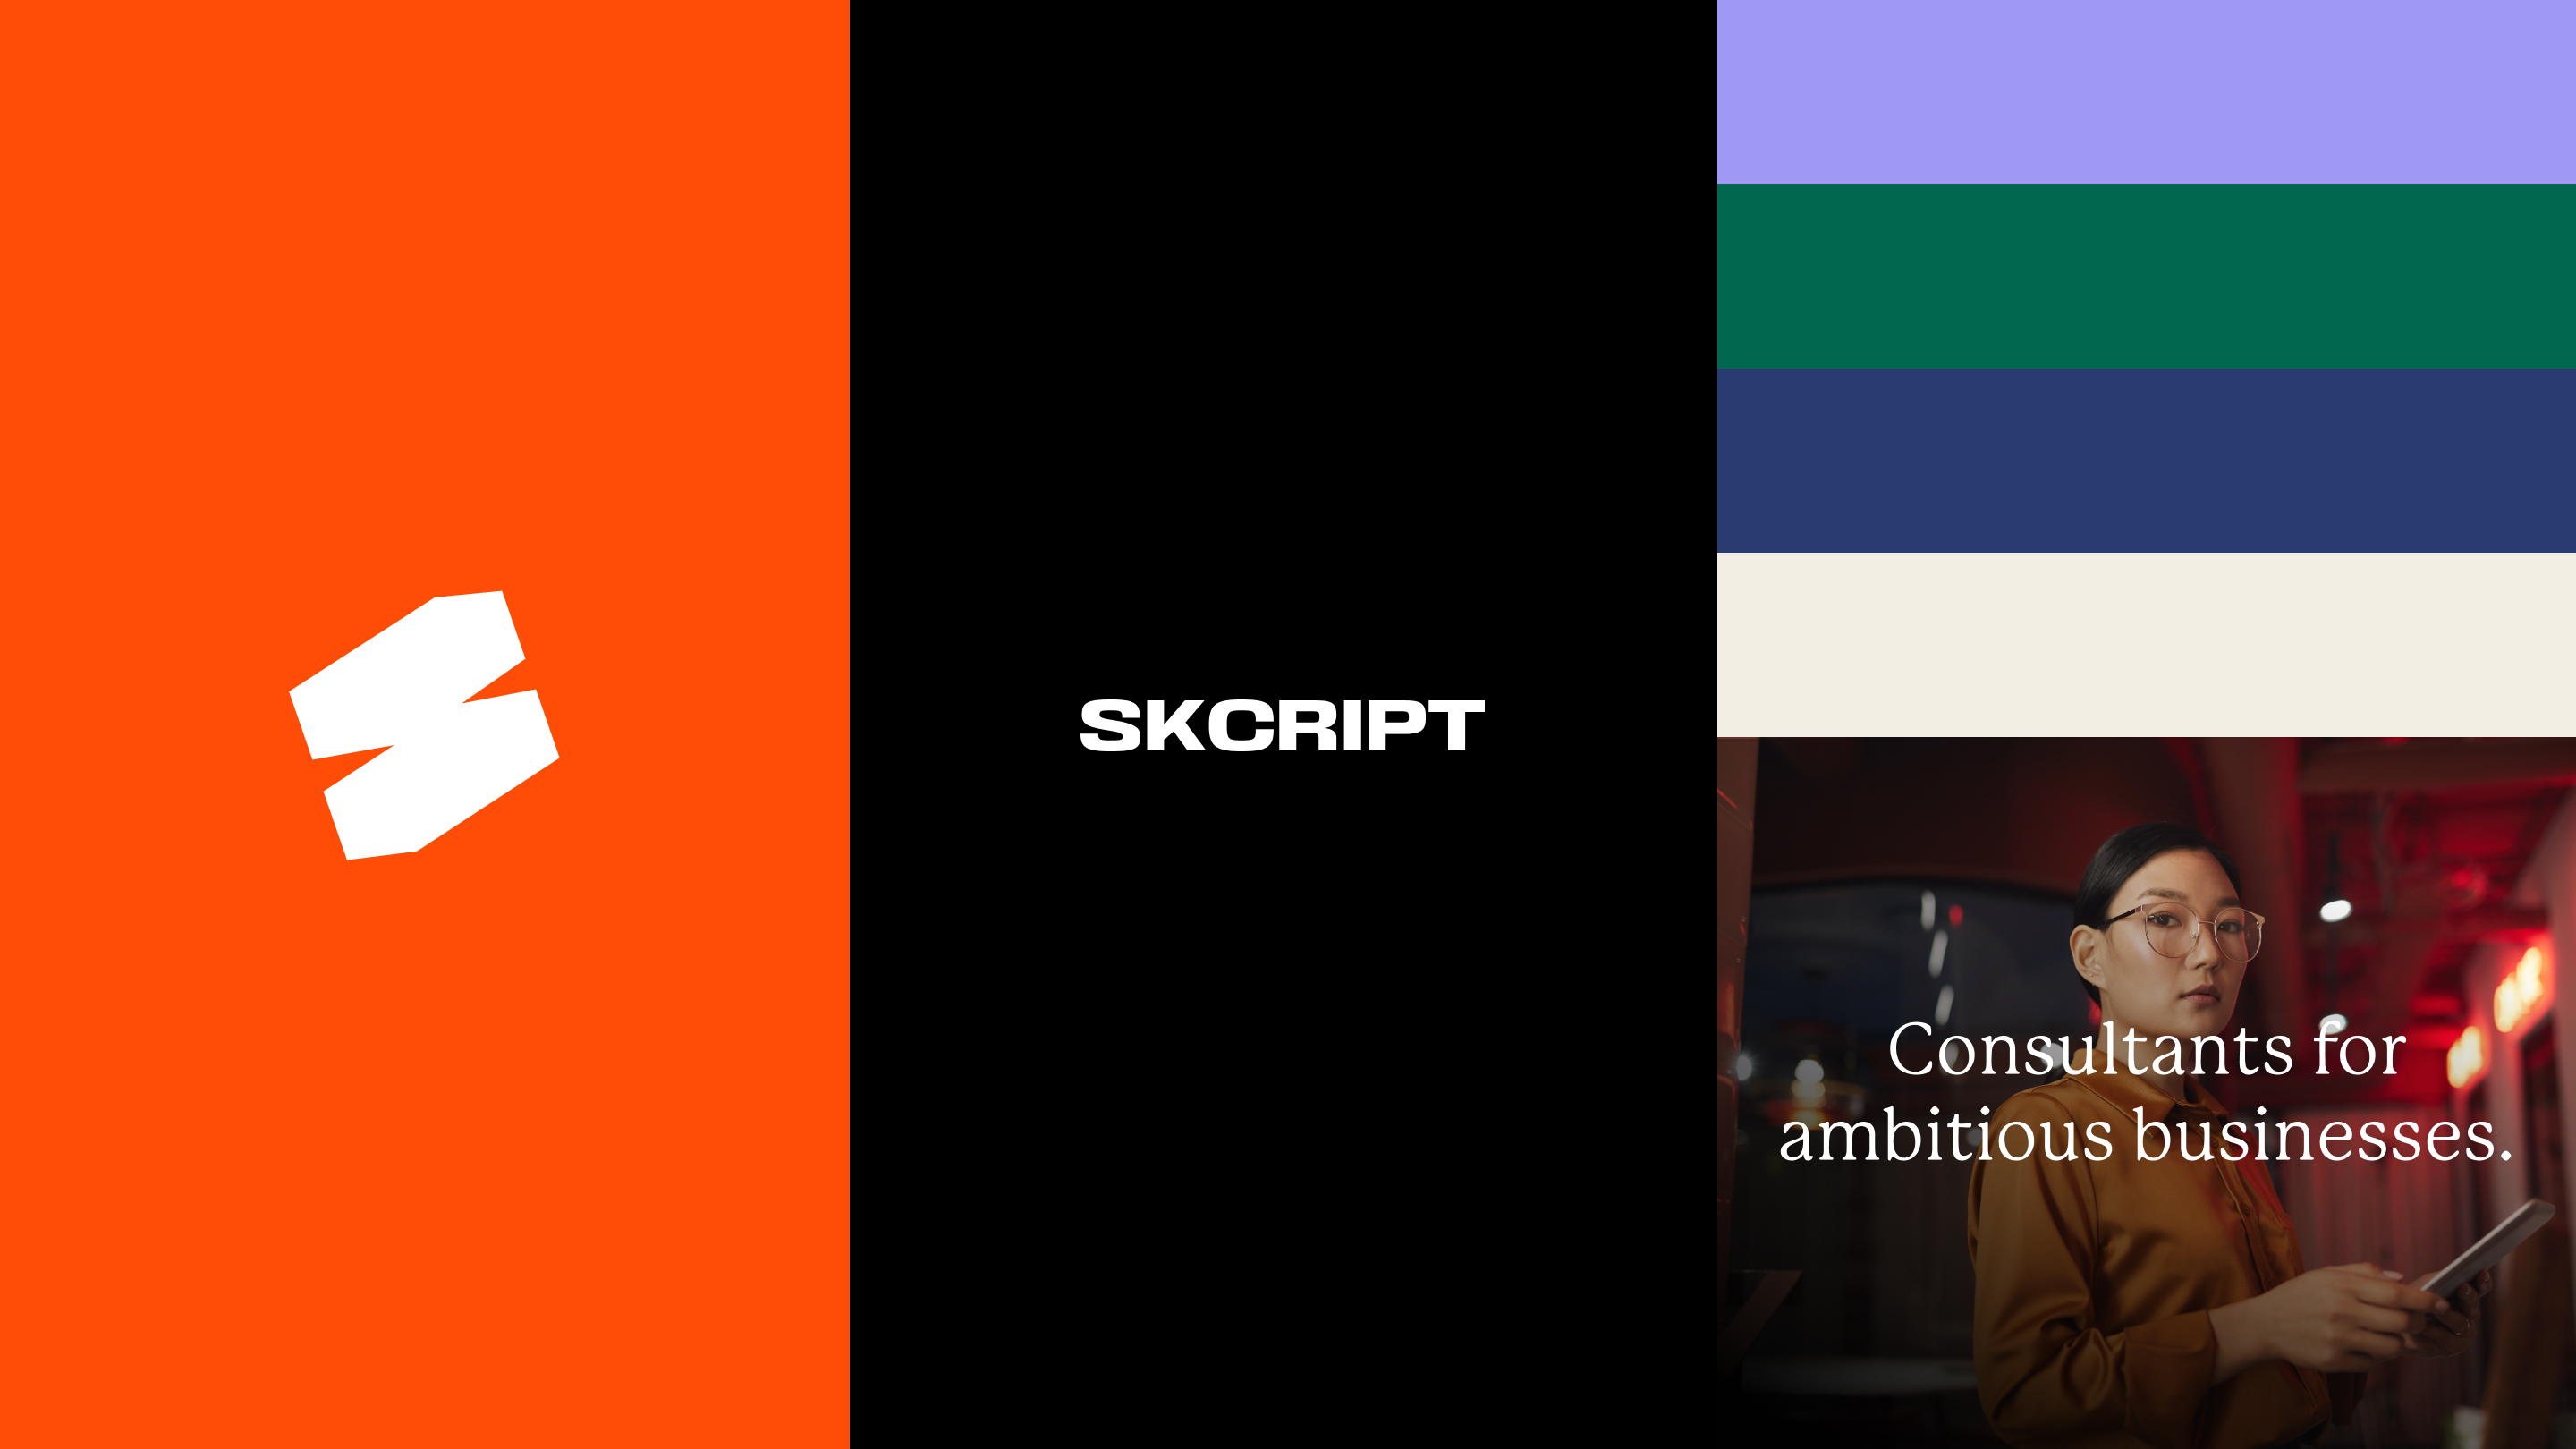 Skcript's new brand identity